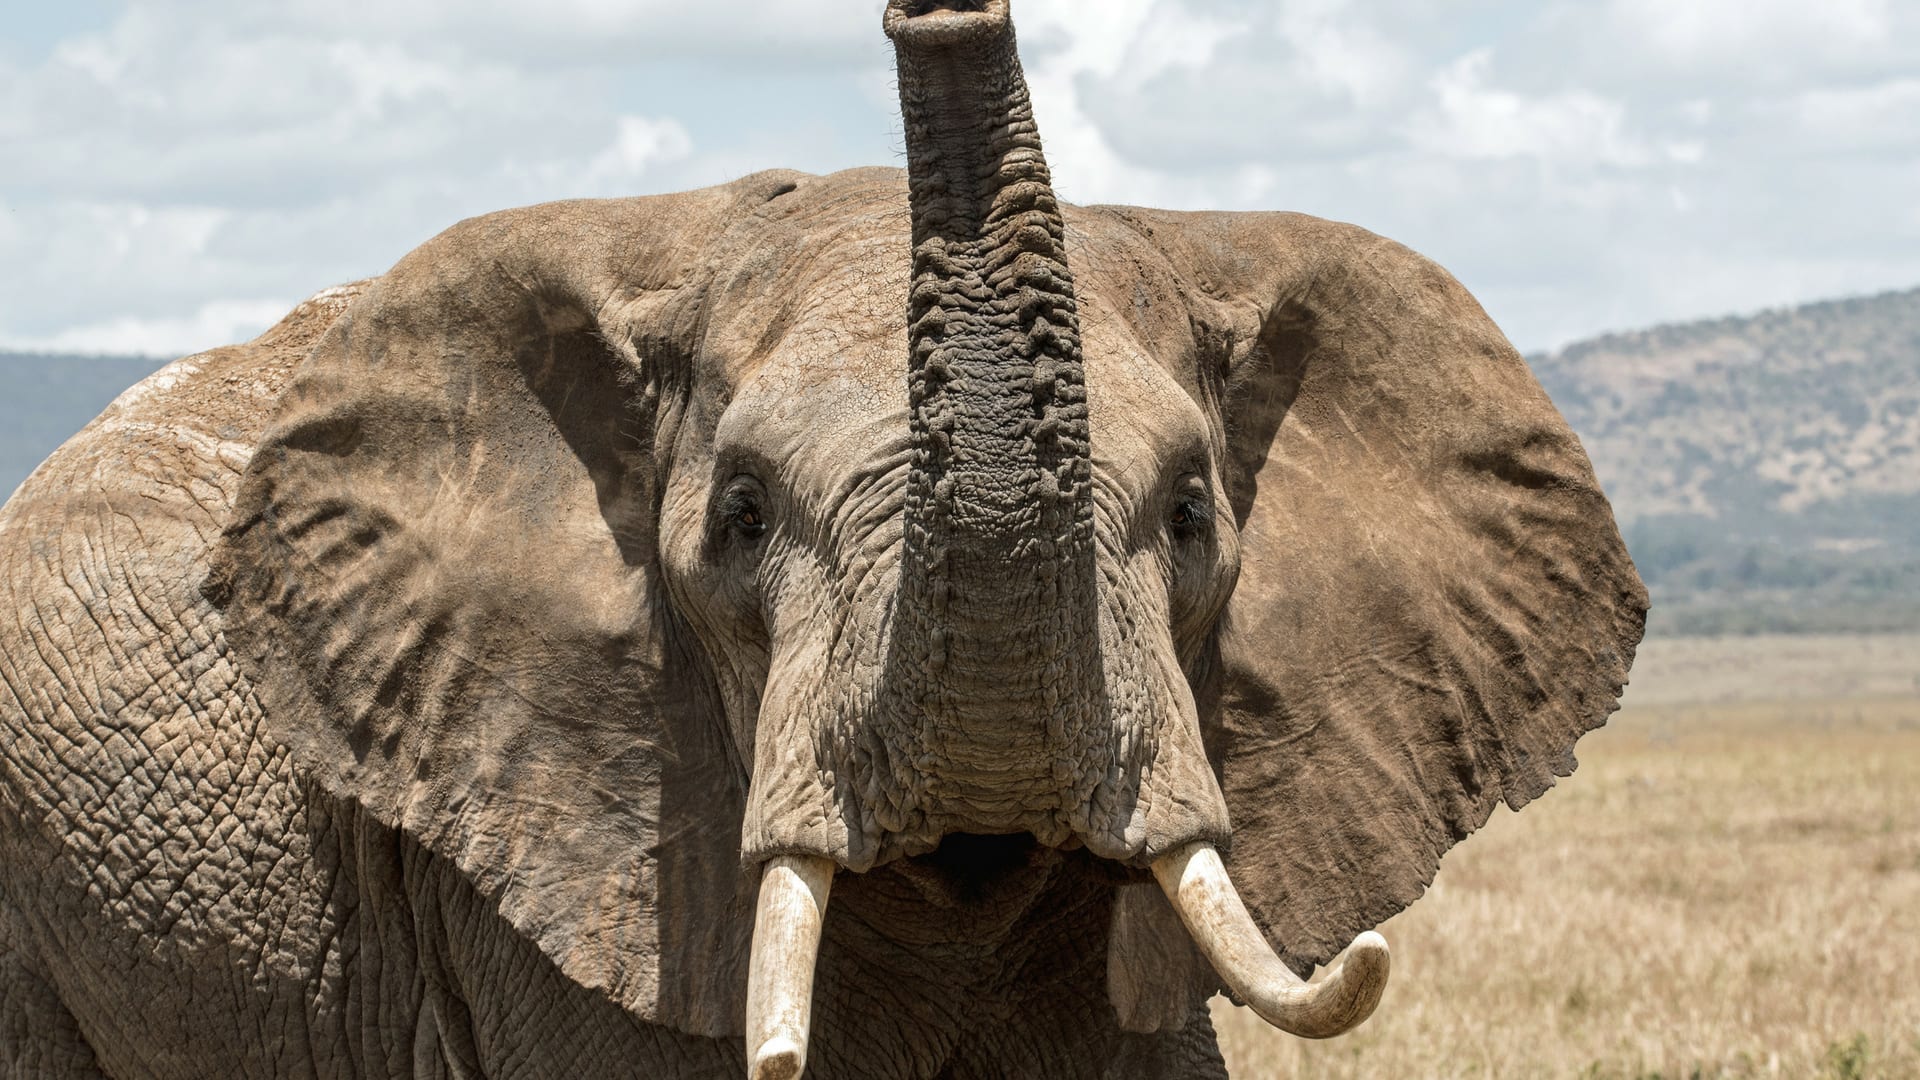 Elephant trunk up